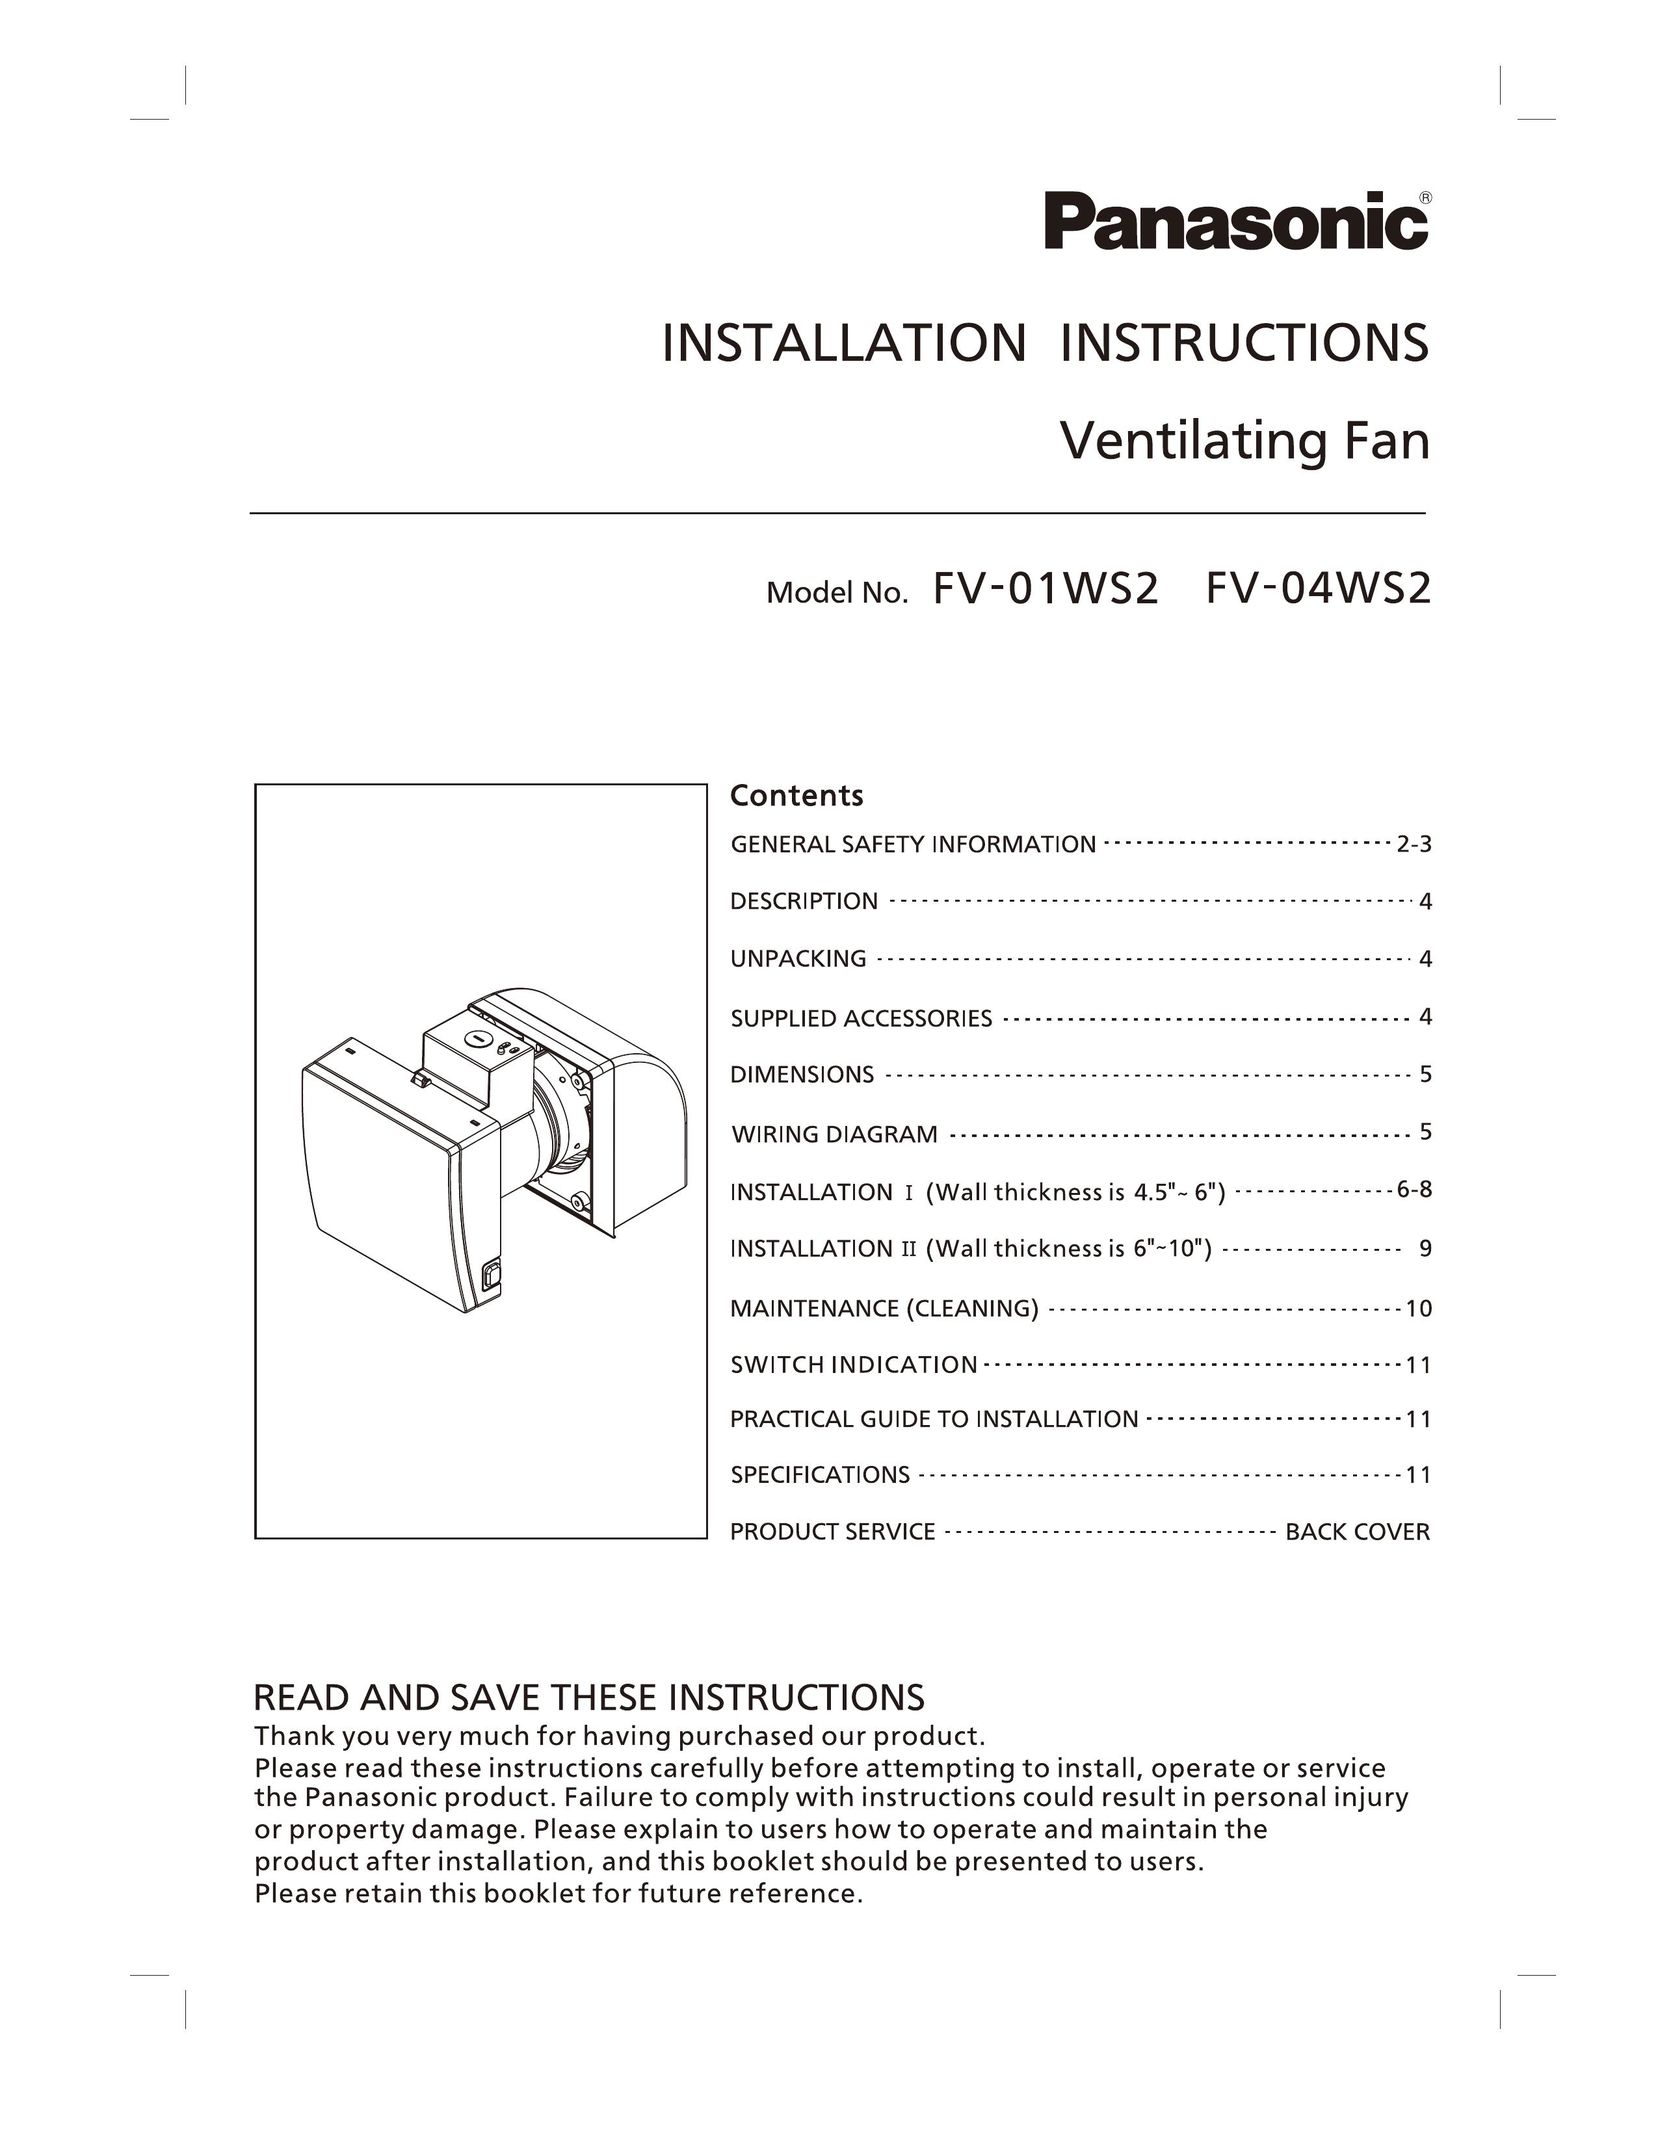 Panasonic FV-01WS2 Dollhouse User Manual